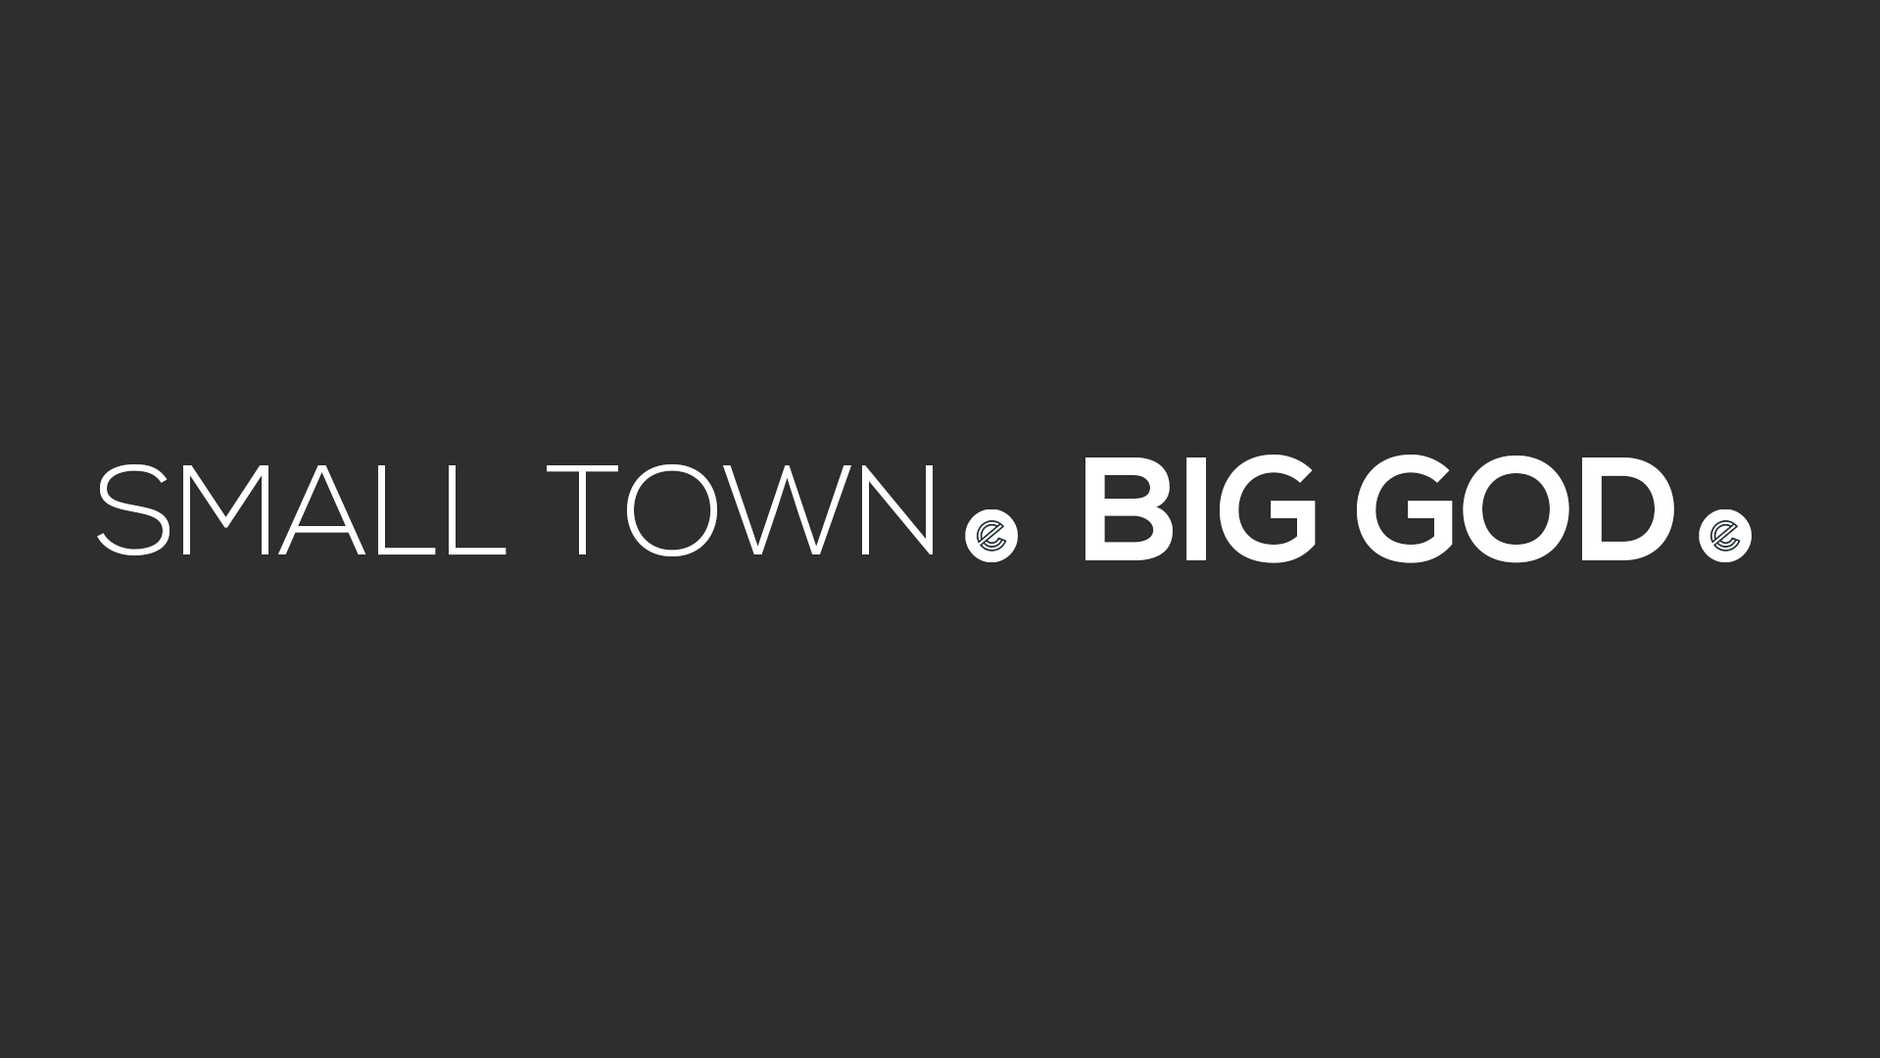 SMALL TOWN BIG GOD